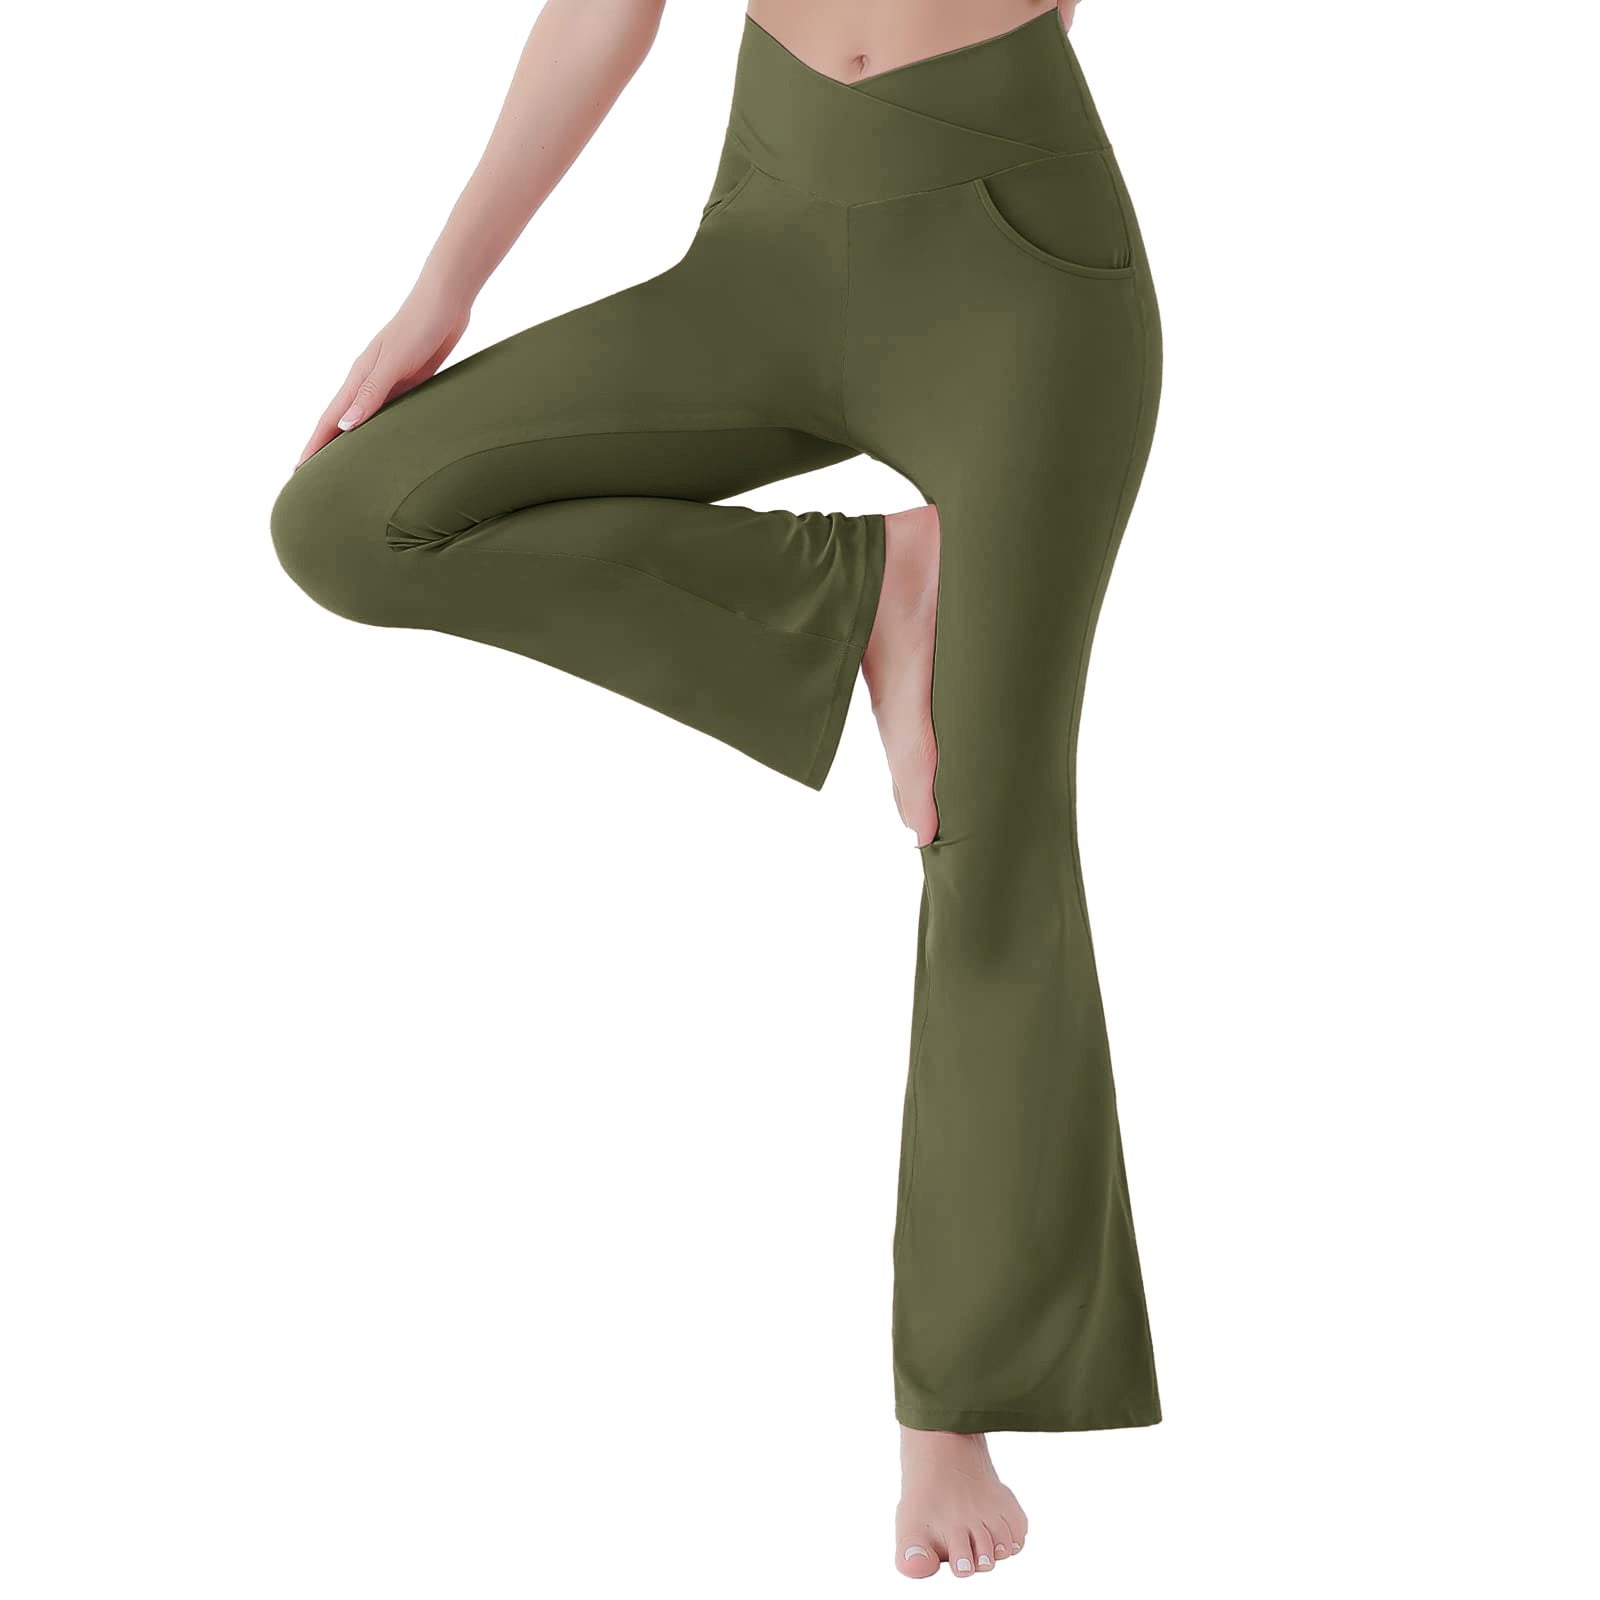 adviicd Yoga Pants For Women Dressy Yoga Leggings For Women Women's Bootcut  Yoga Pants with Pockets, High Waist Workout Bootleg Yoga Pants Tummy  Control Navy M 